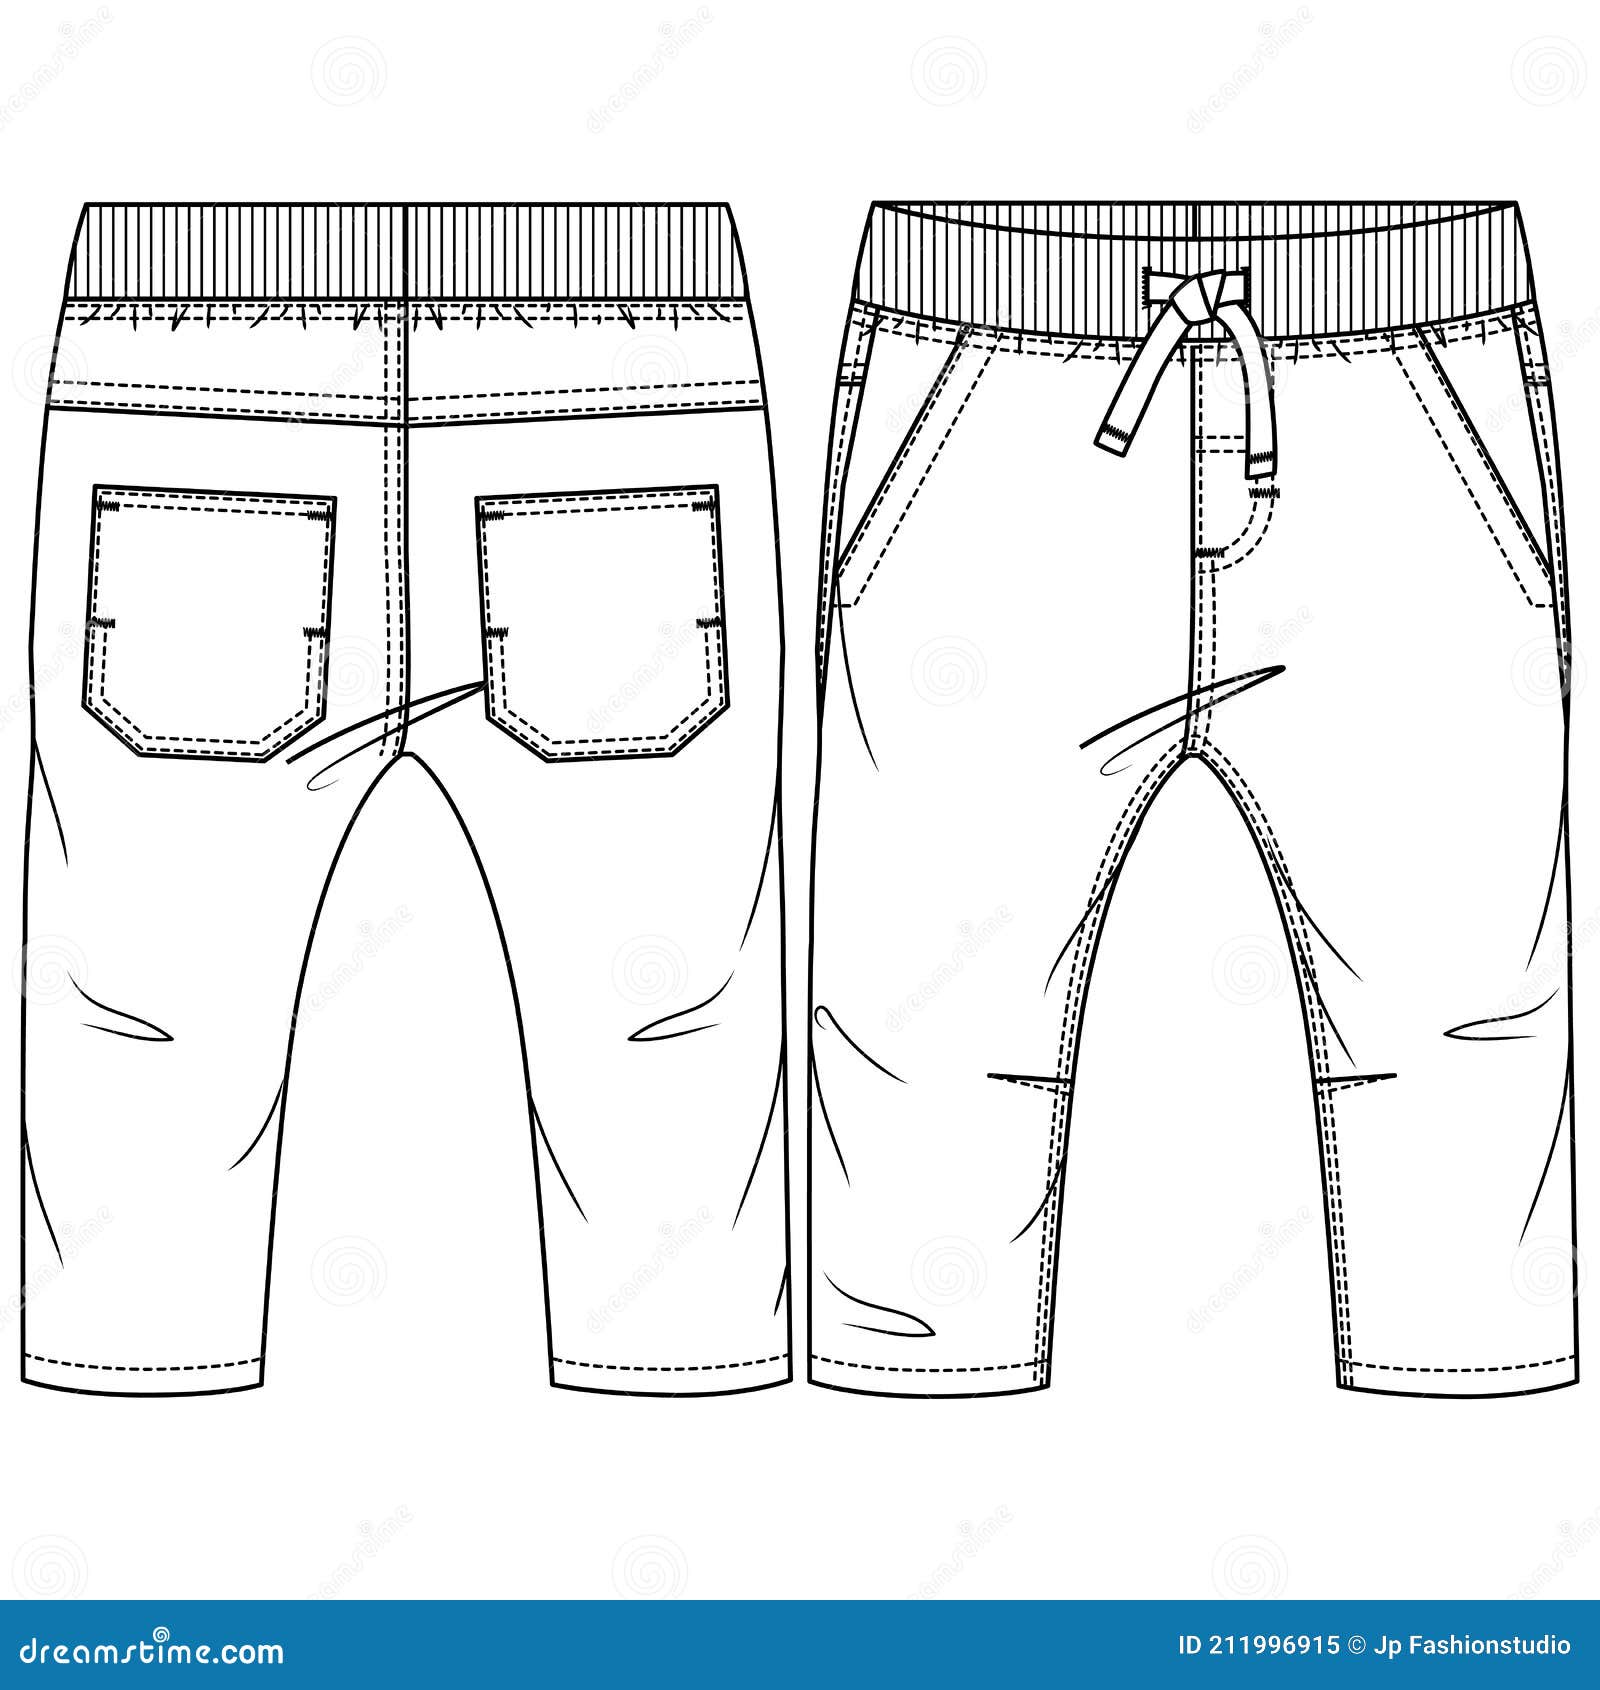 Free Downloads: Illustrator Pants Flat Sketches | Fashion sketch template,  Fashion flats, Flat sketches